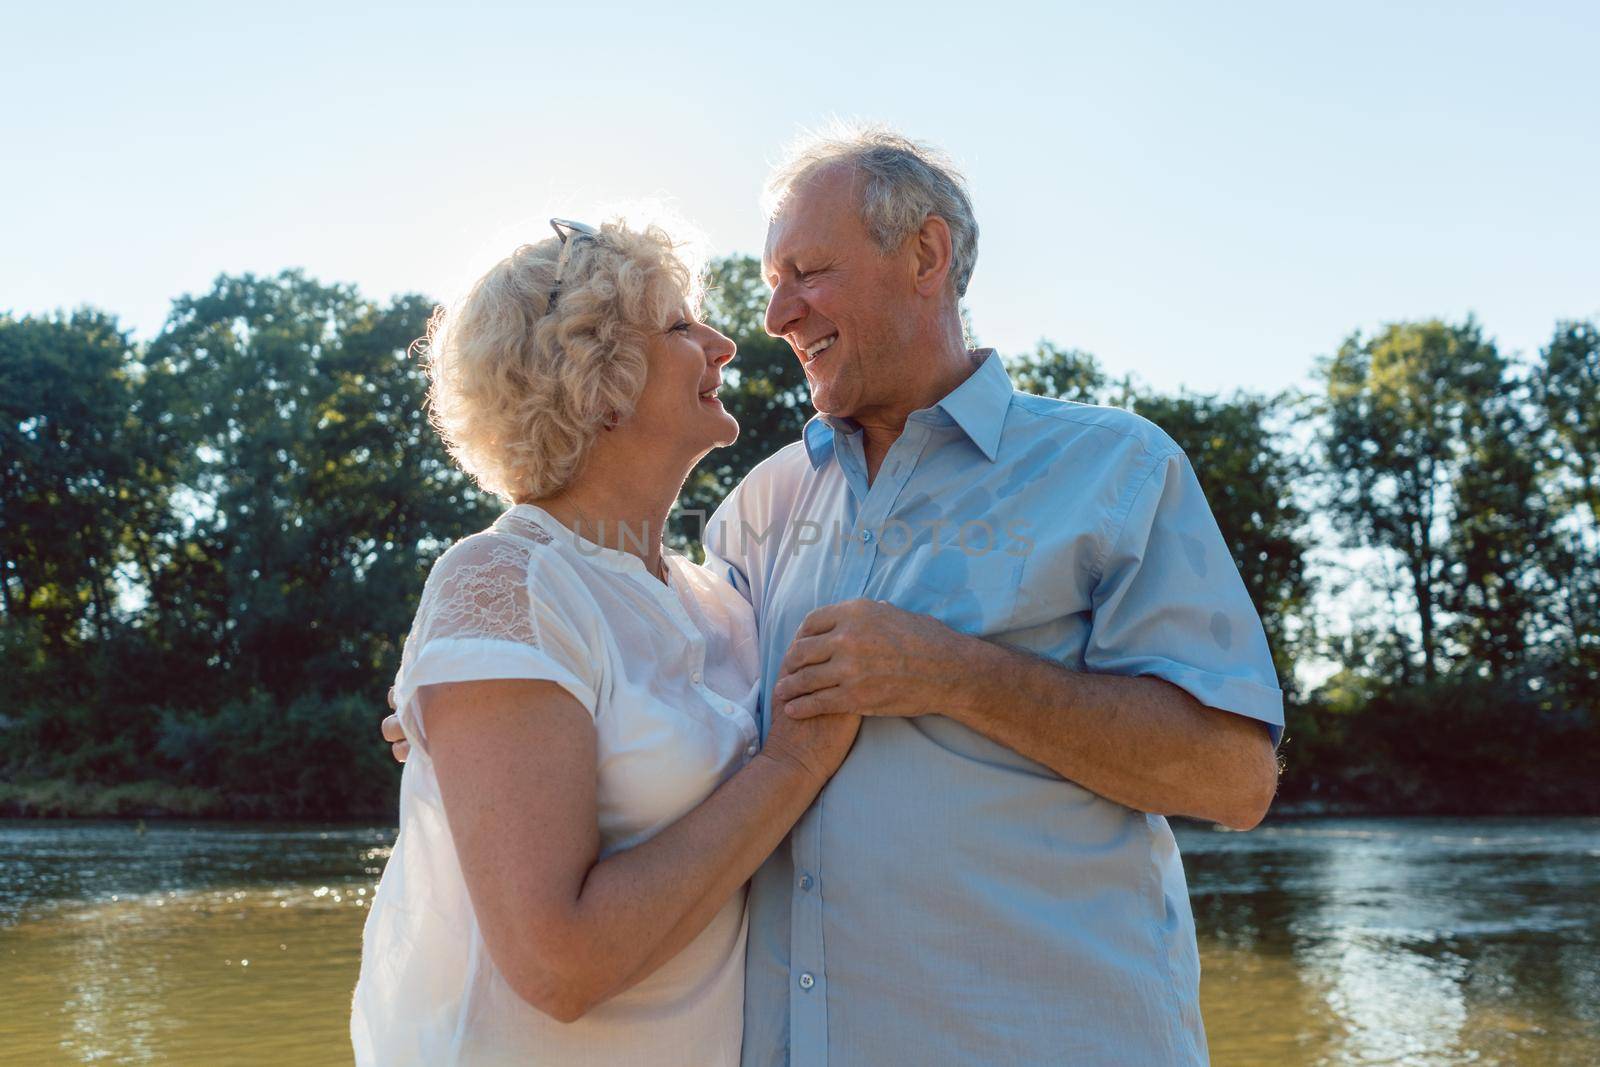 Romantic senior couple enjoying a healthy and active lifestyle outdoors by Kzenon